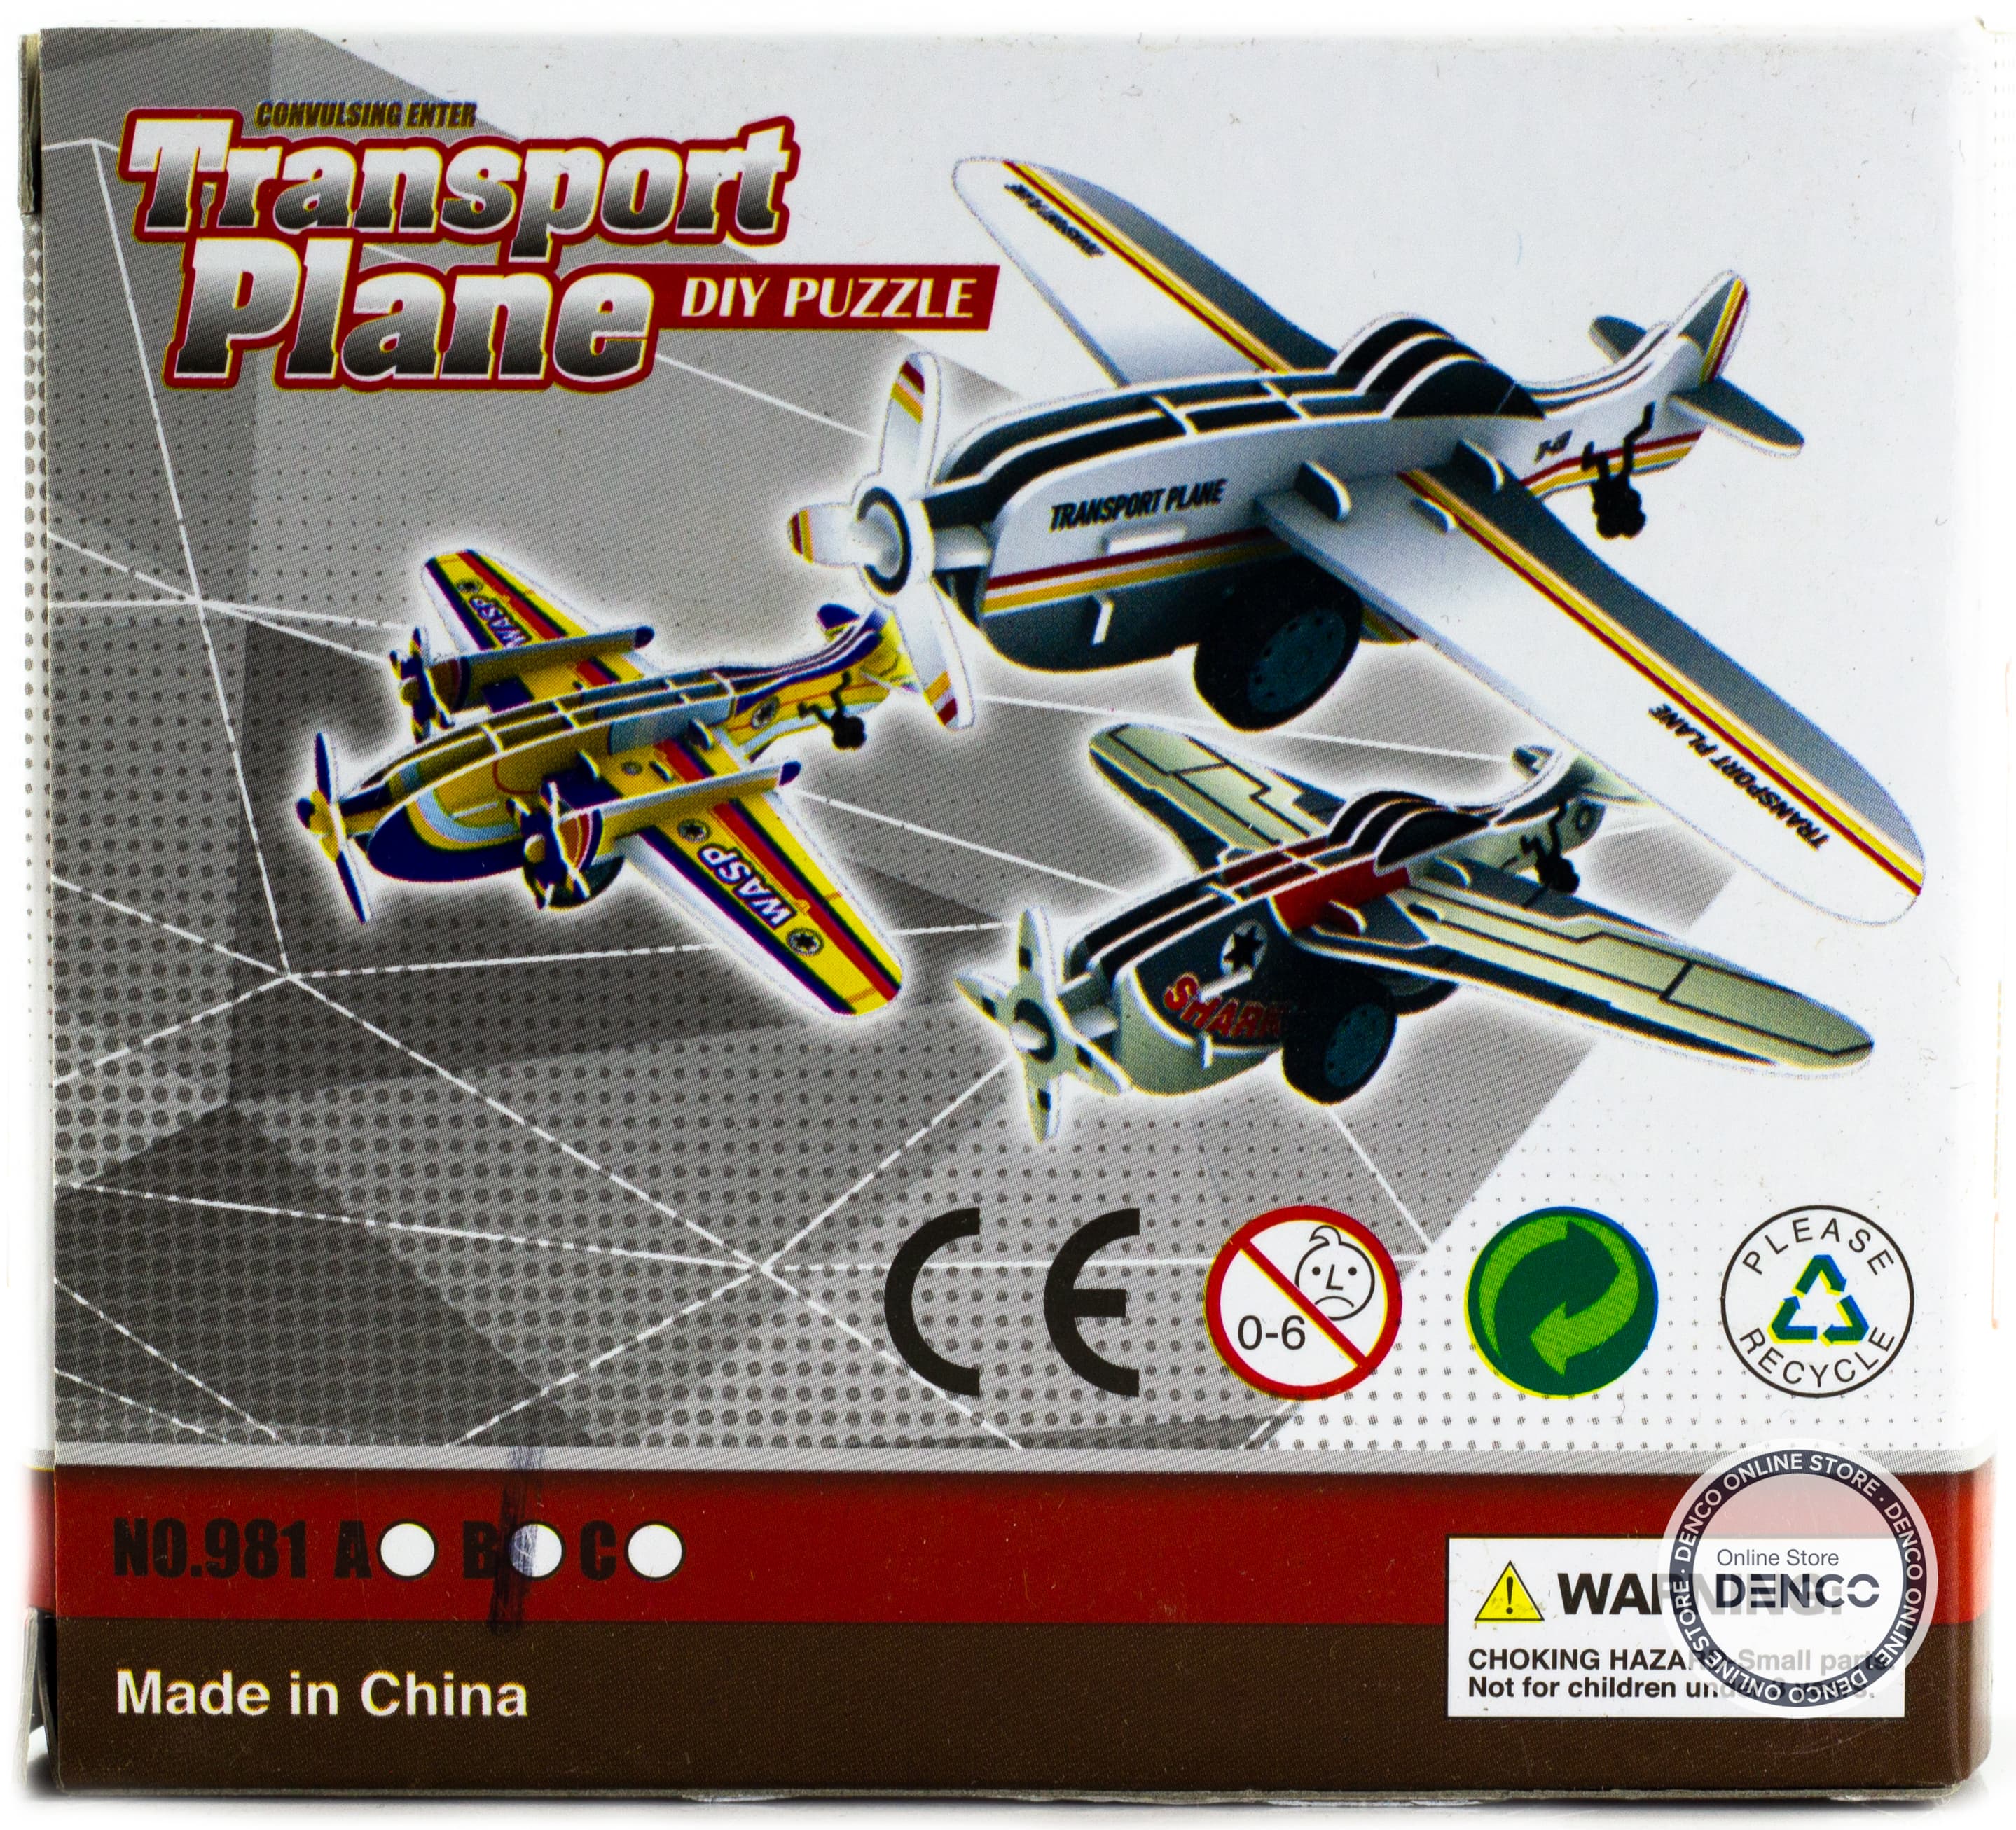 3D-Пазл Самолёт  Junfa Toys «Transport plane» 981